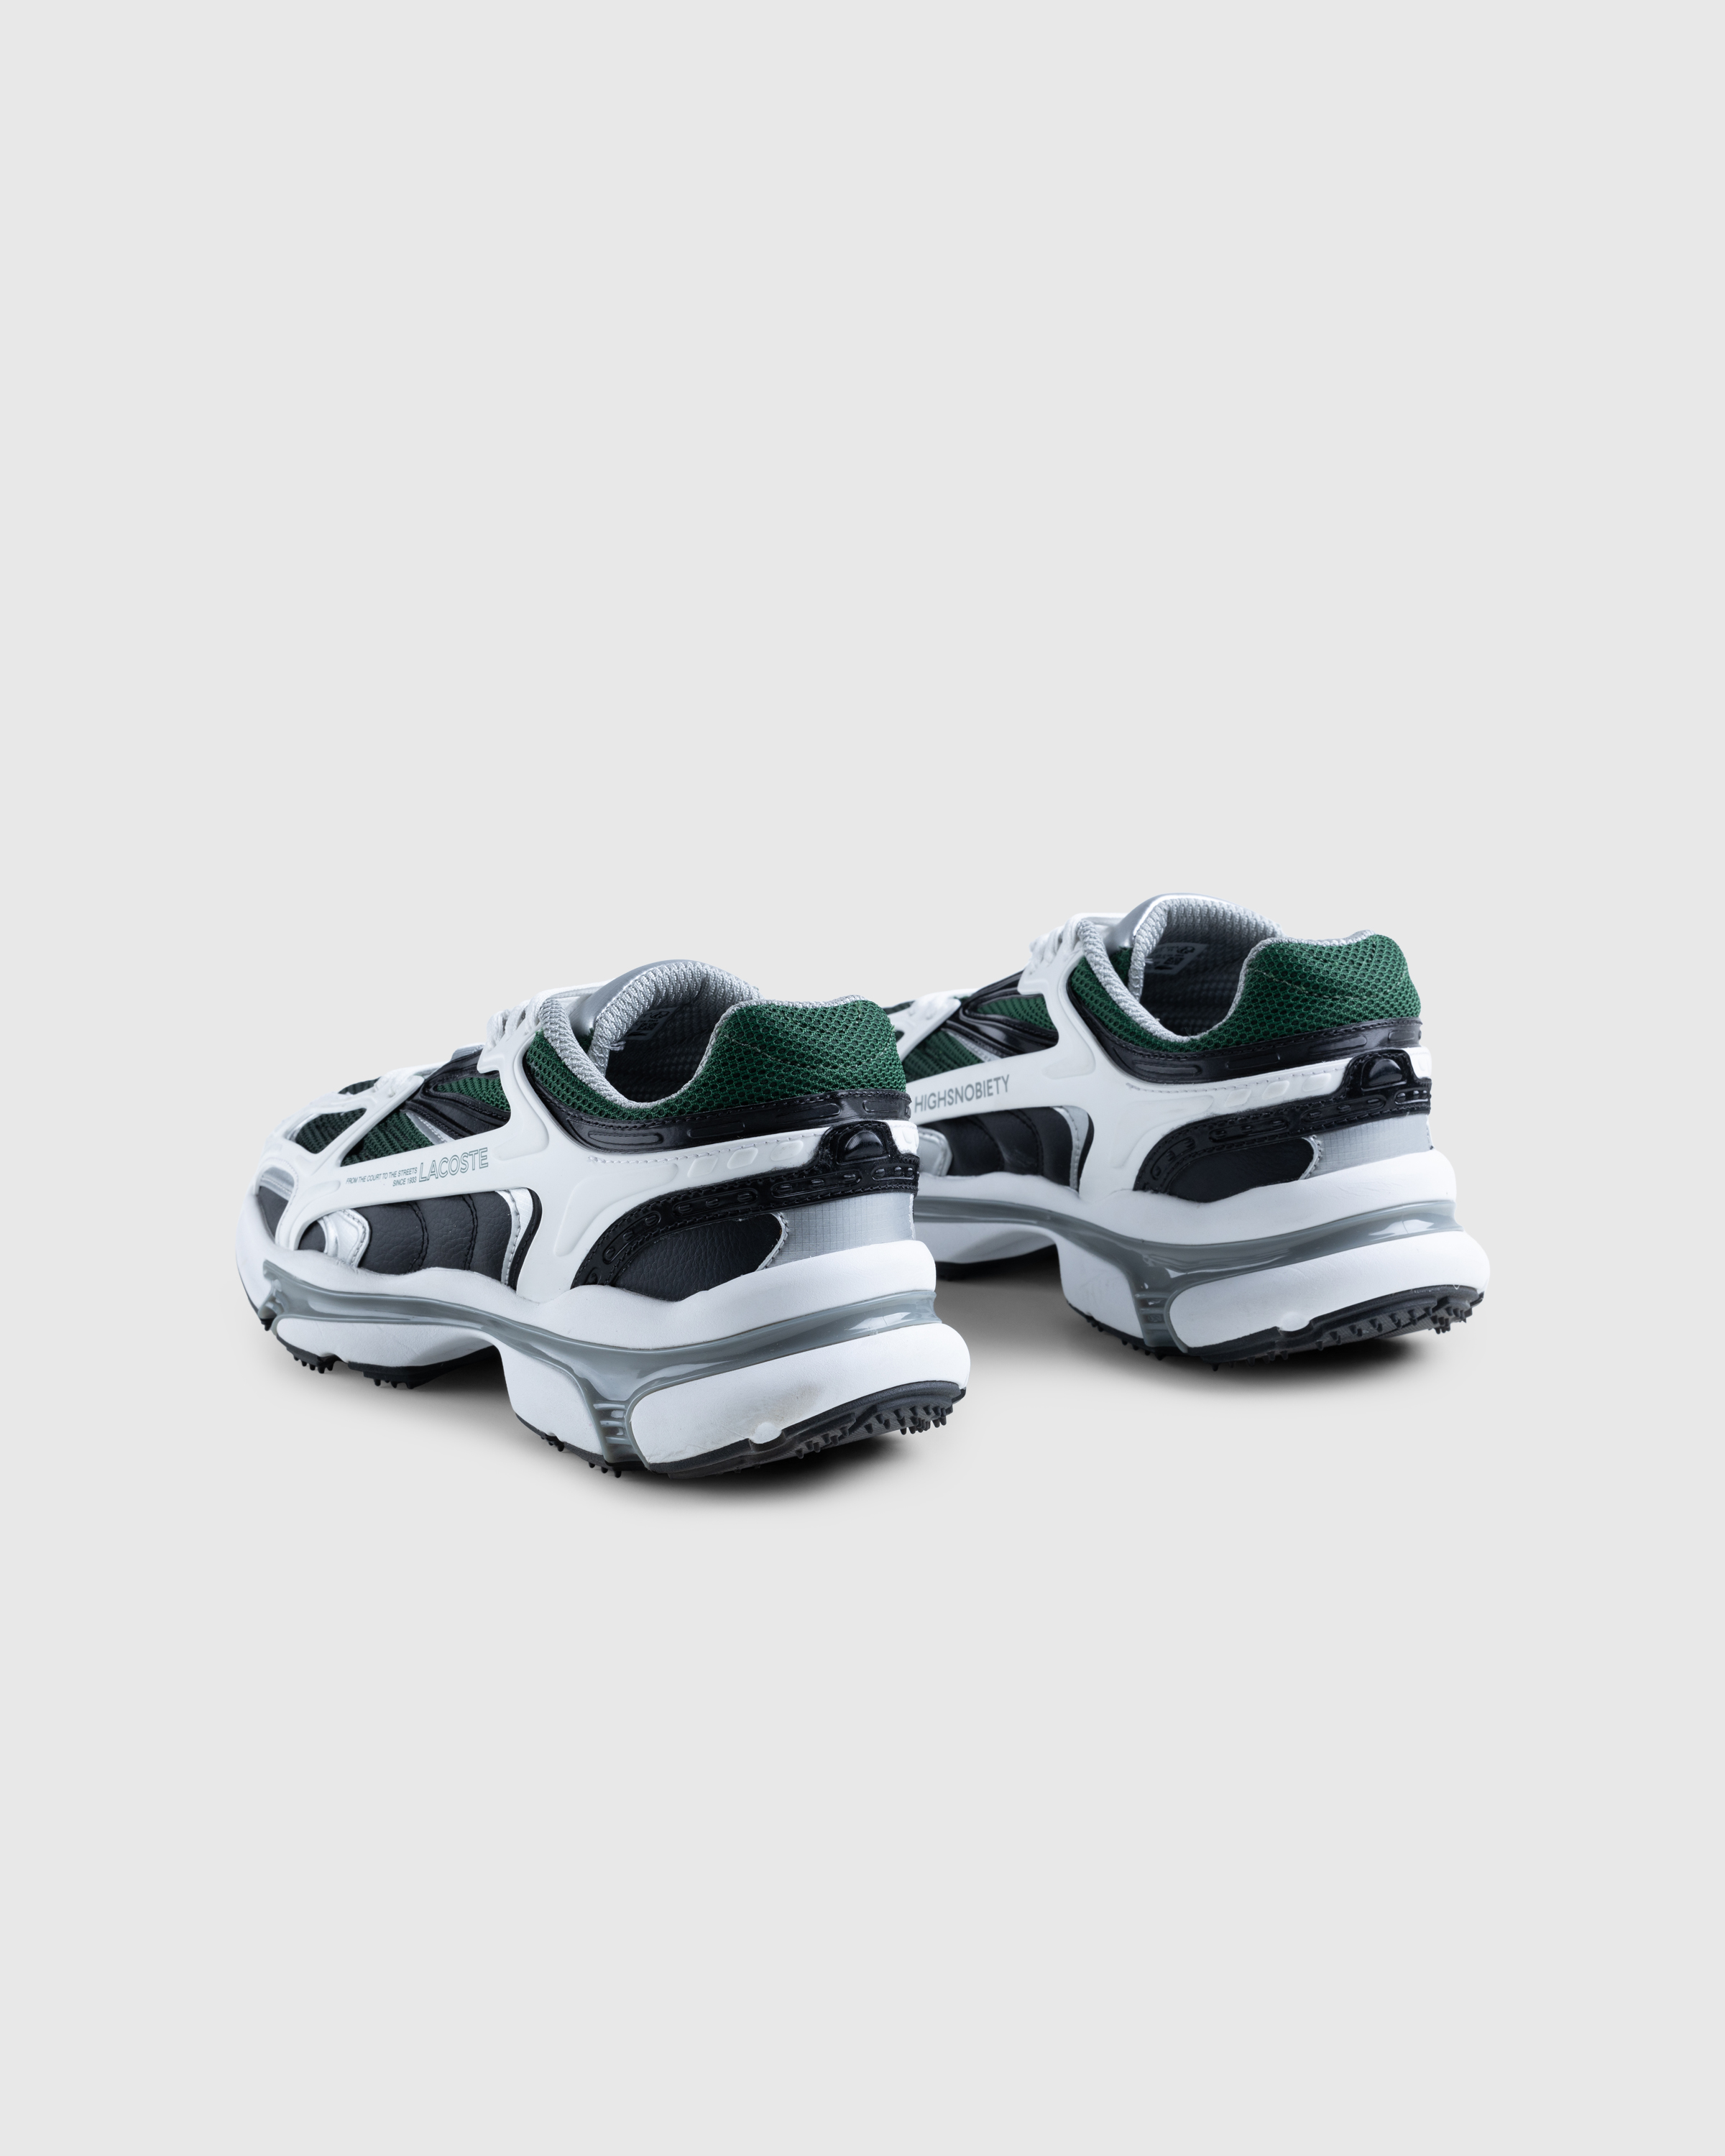 Lacoste x Highsnobiety – L003 2k24 (M) "Not In Paris" Multi - Low Top Sneakers - Green - Image 4